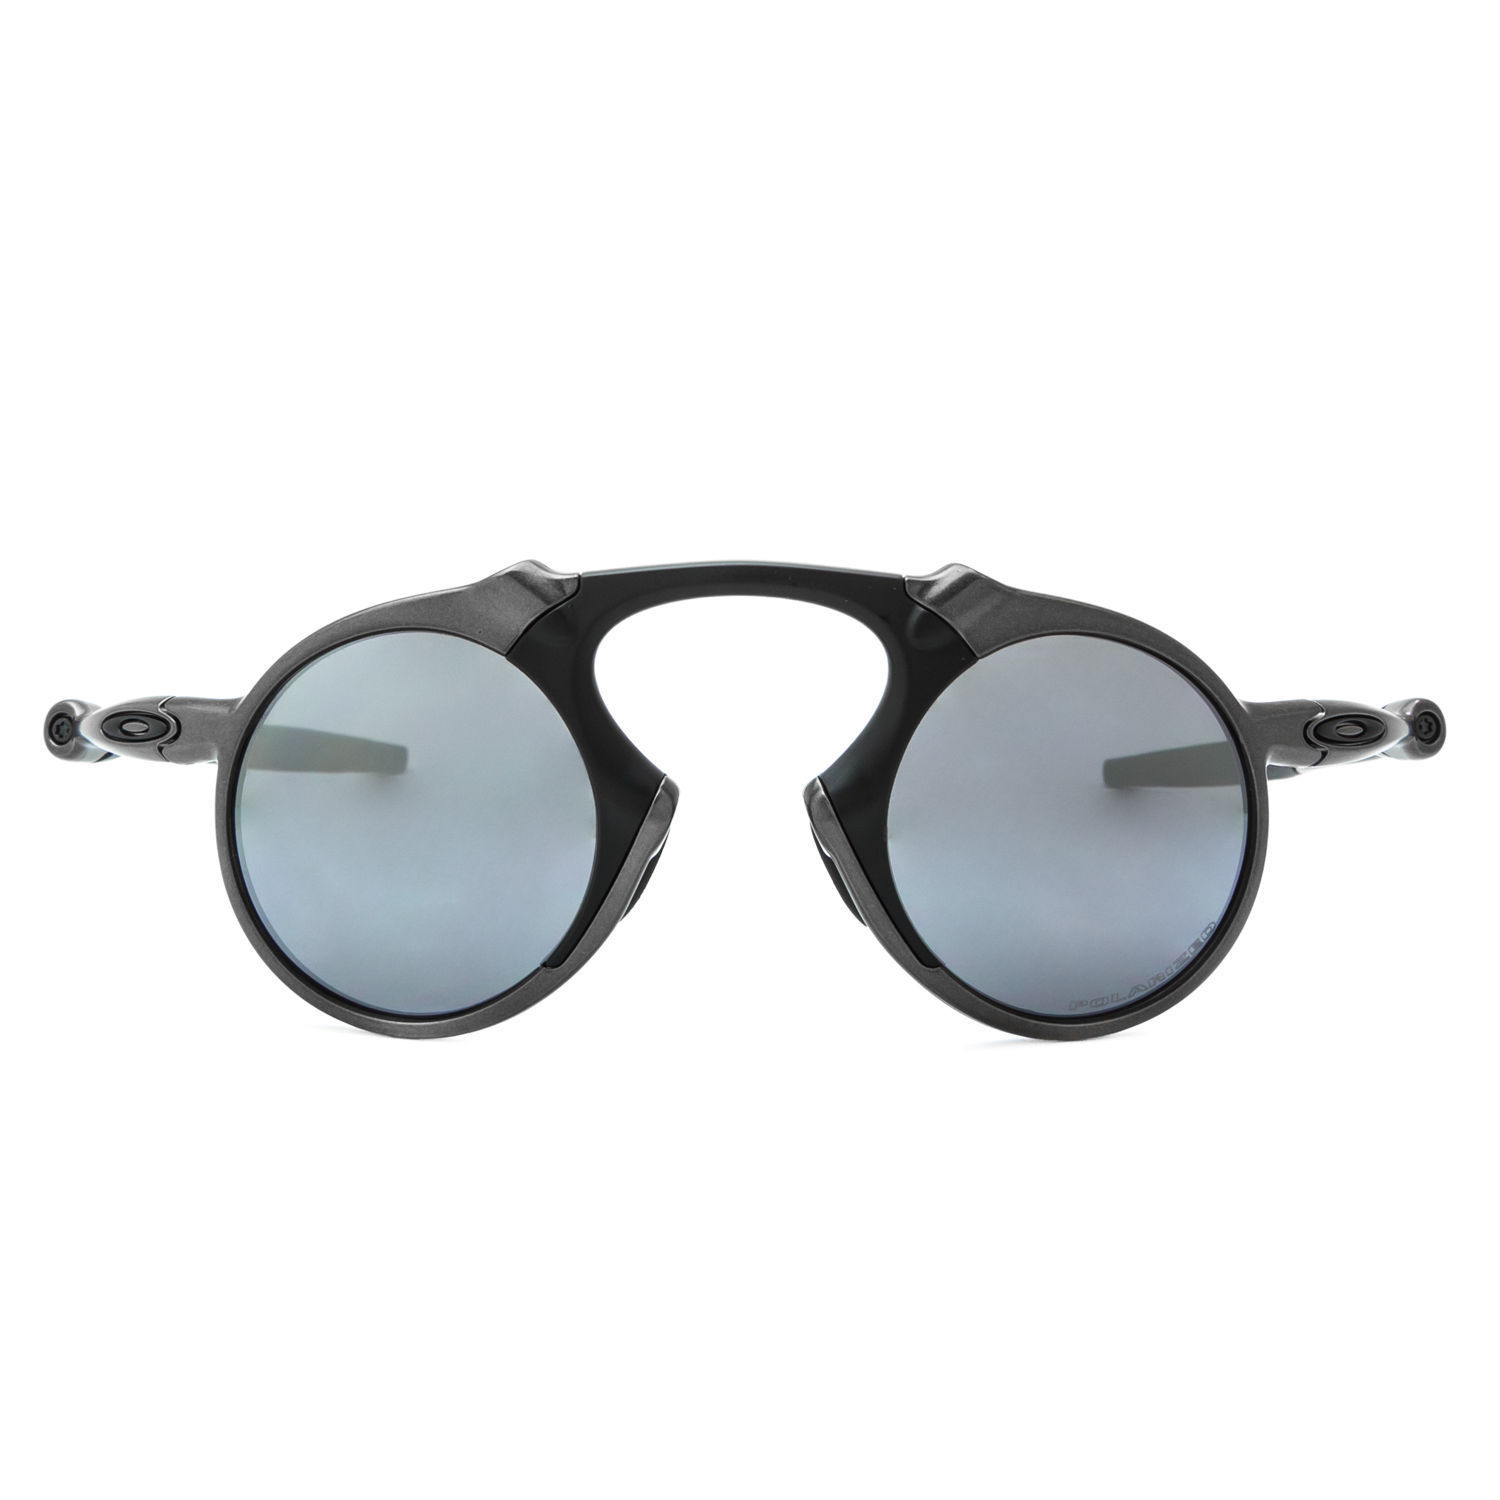 New Oakley Madman Sunglasses OO6019-02 Pewter / Black Iridium Polarized ...